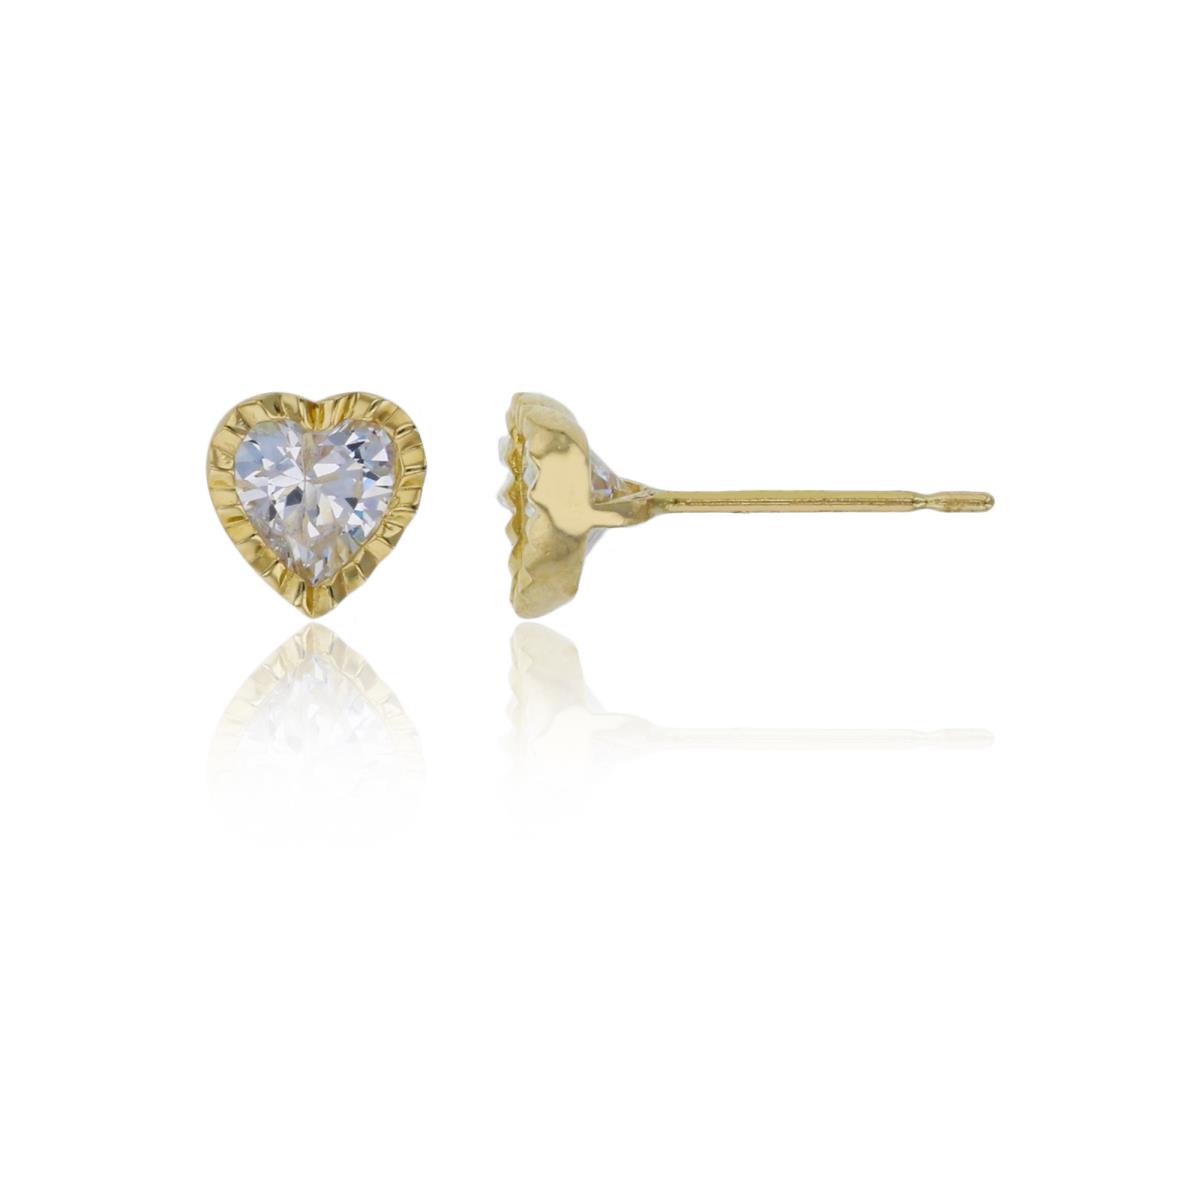 14K Yellow Gold 5mm Heart Cut DC Stud Earring